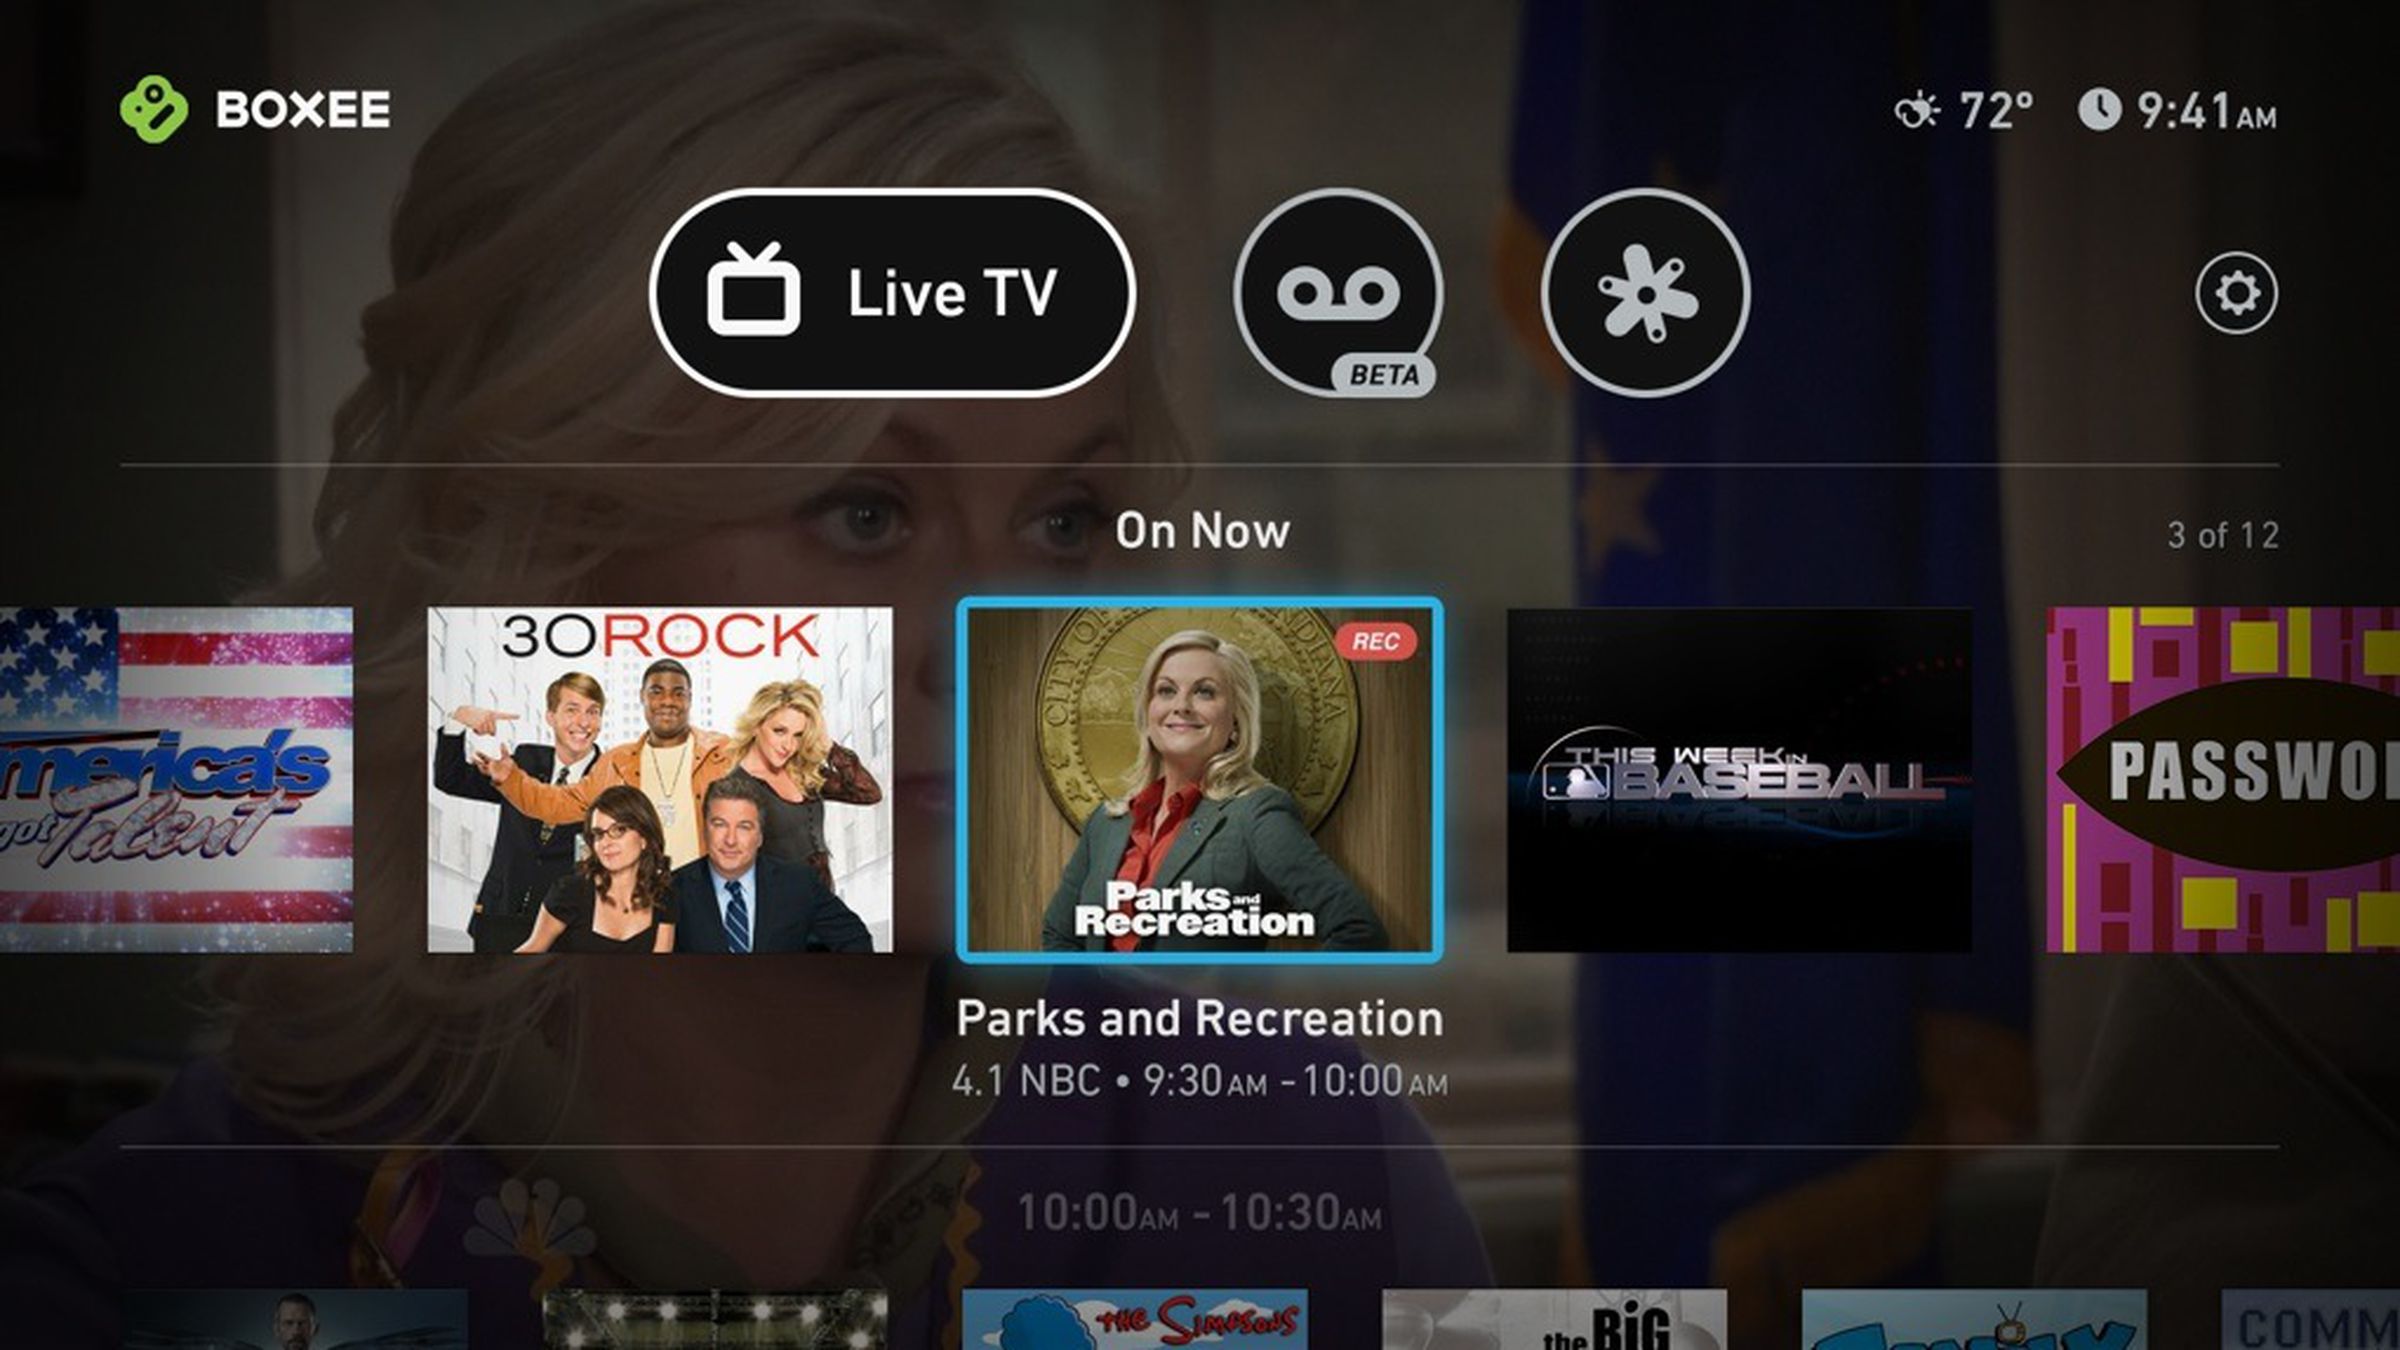 Boxee TV interface screenshots